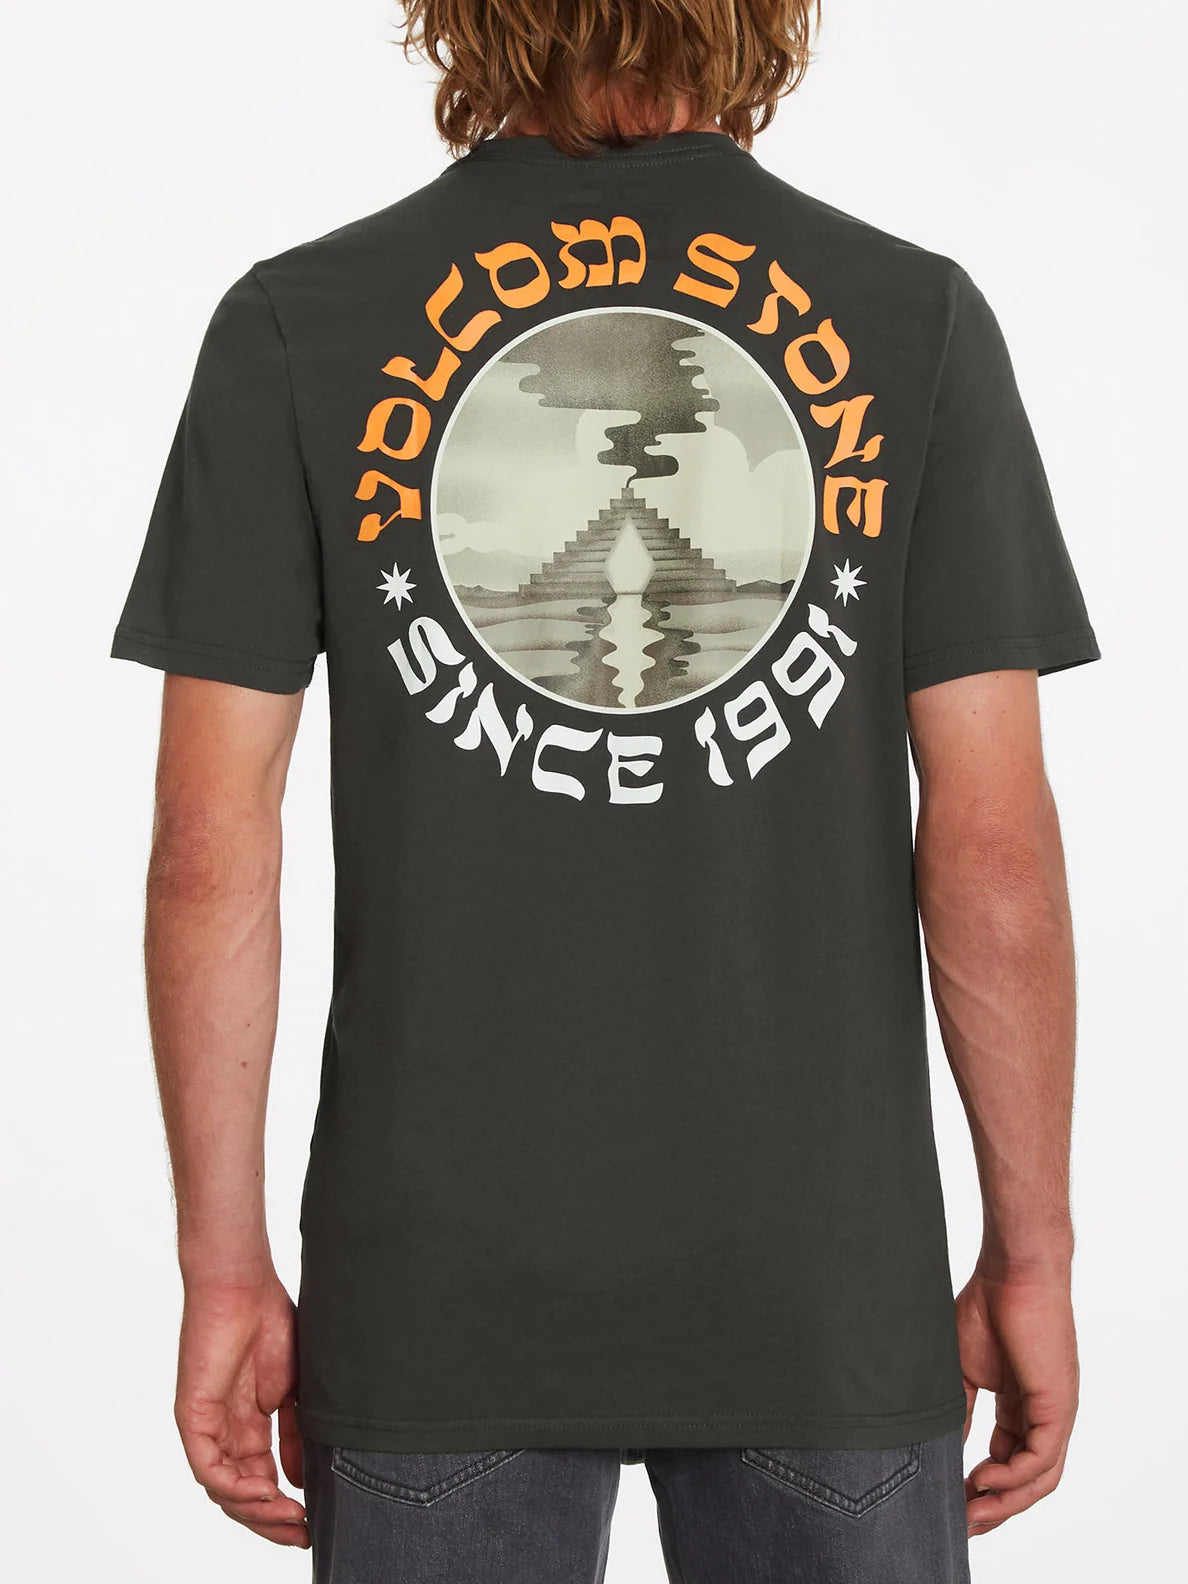 Camiseta Volcom Stone Portal Rinsed Black | Camisetas de hombre | Camisetas manga corta de hombre | Volcom Shop | surfdevils.com